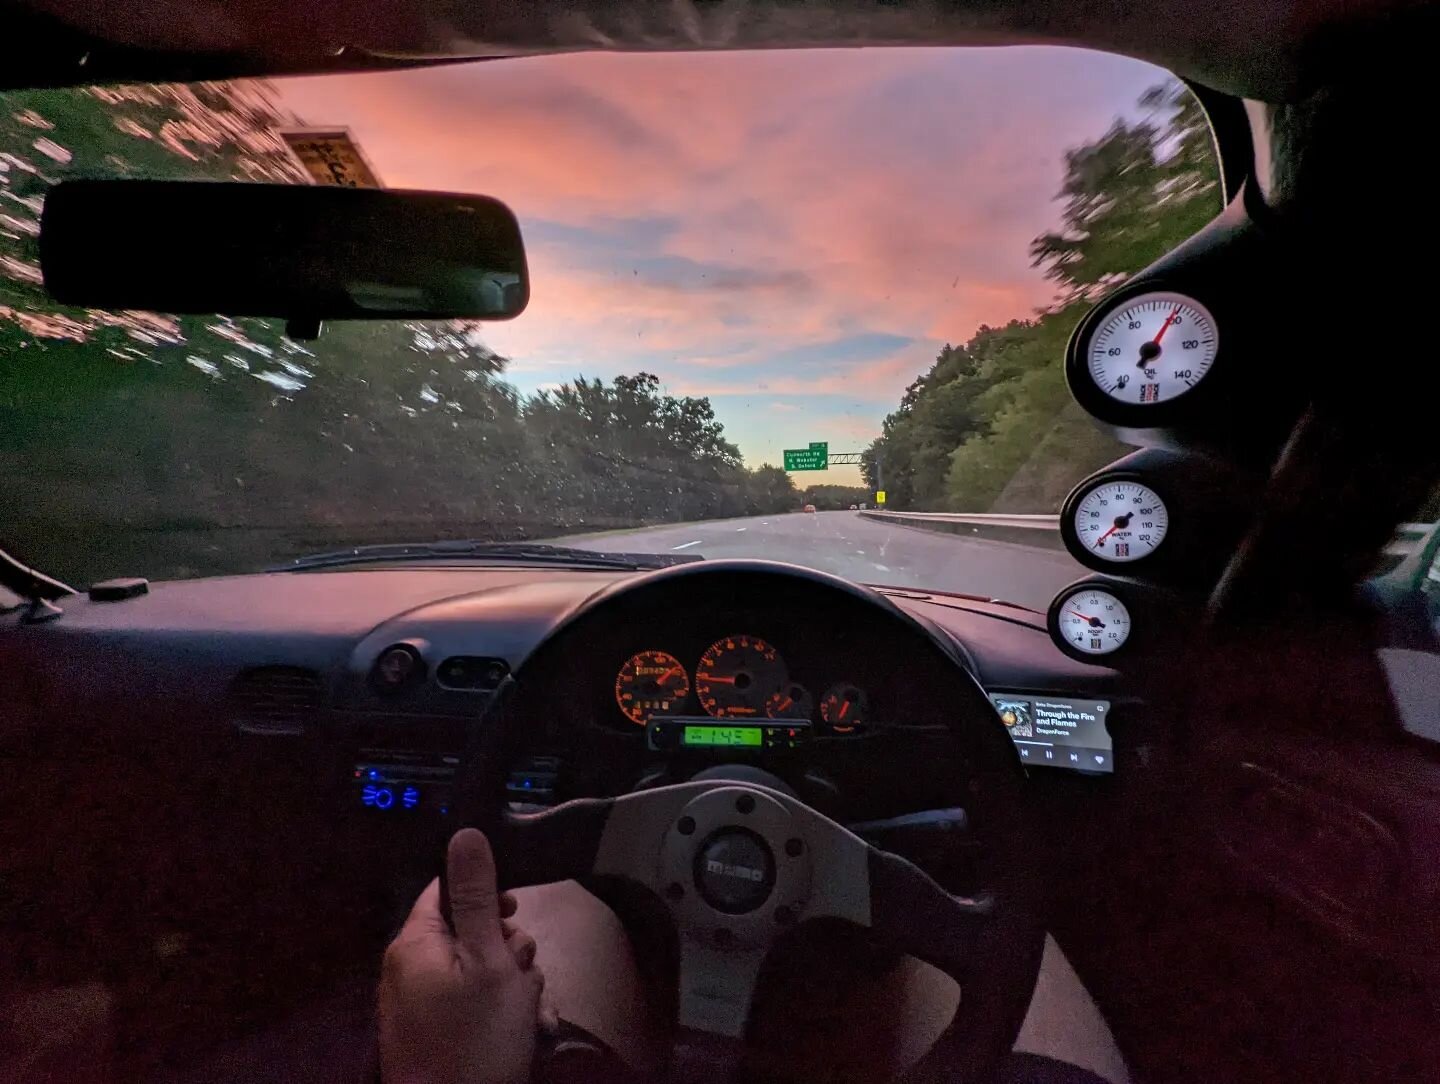 Driving and dusk looks pretty 

#autozam #pg6sa #rhd #jdm #suzuki #suzukicara #autozamaz1 #mazda #pg6sa #kei #keicar #interior #gauges #pillargauges #dusk #driving #colorful